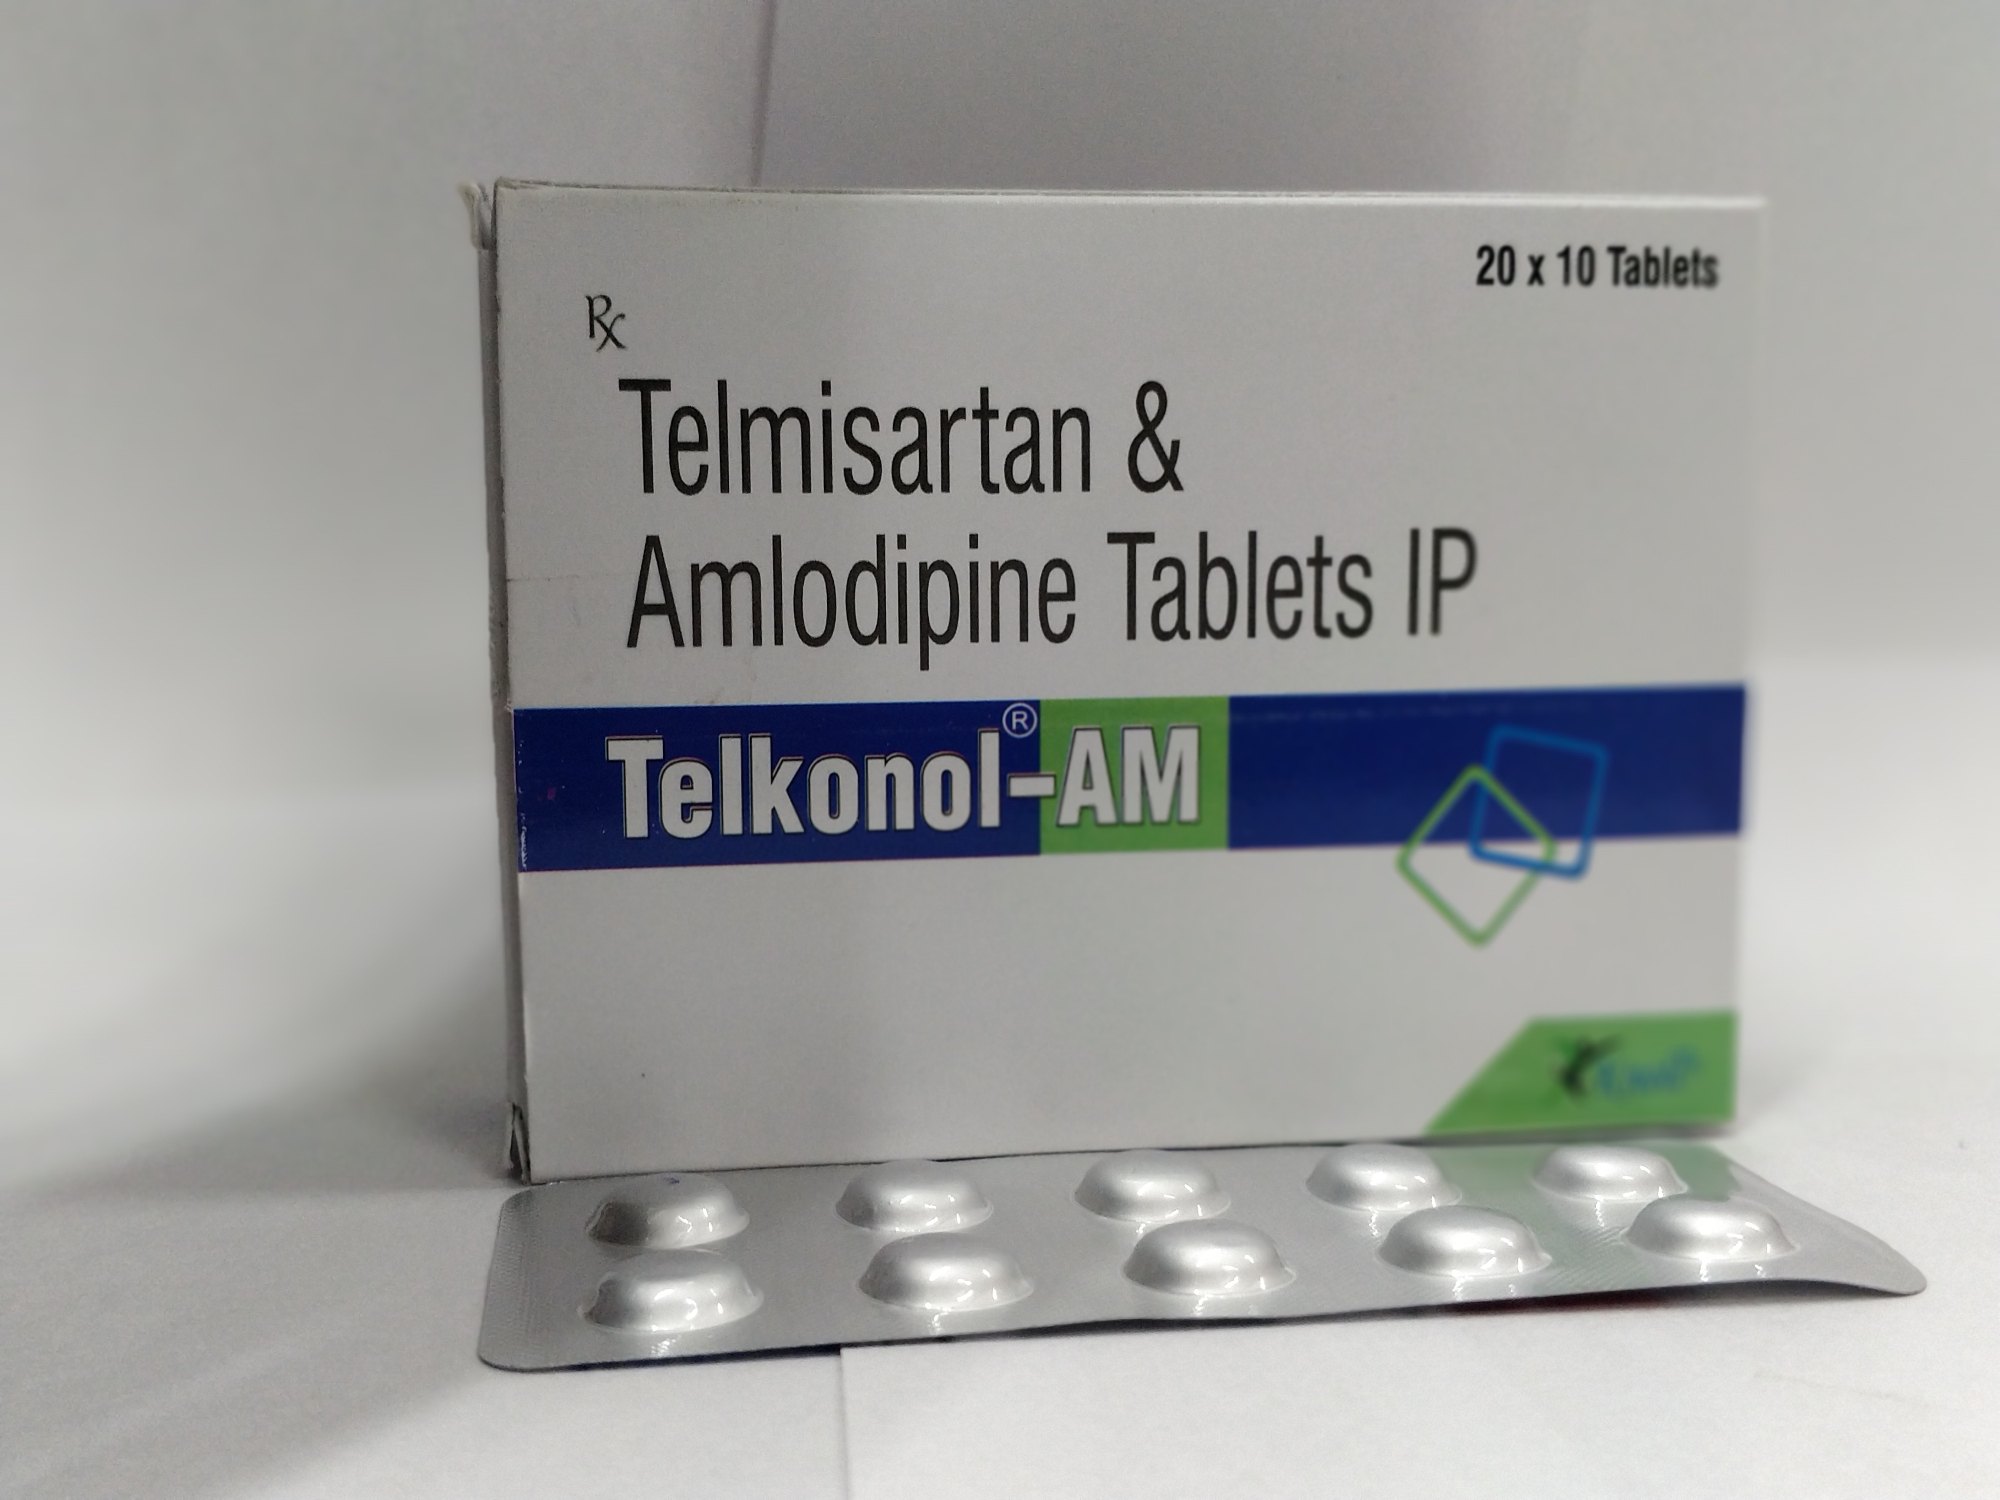 Telmisartan And Amlodipine Tablets